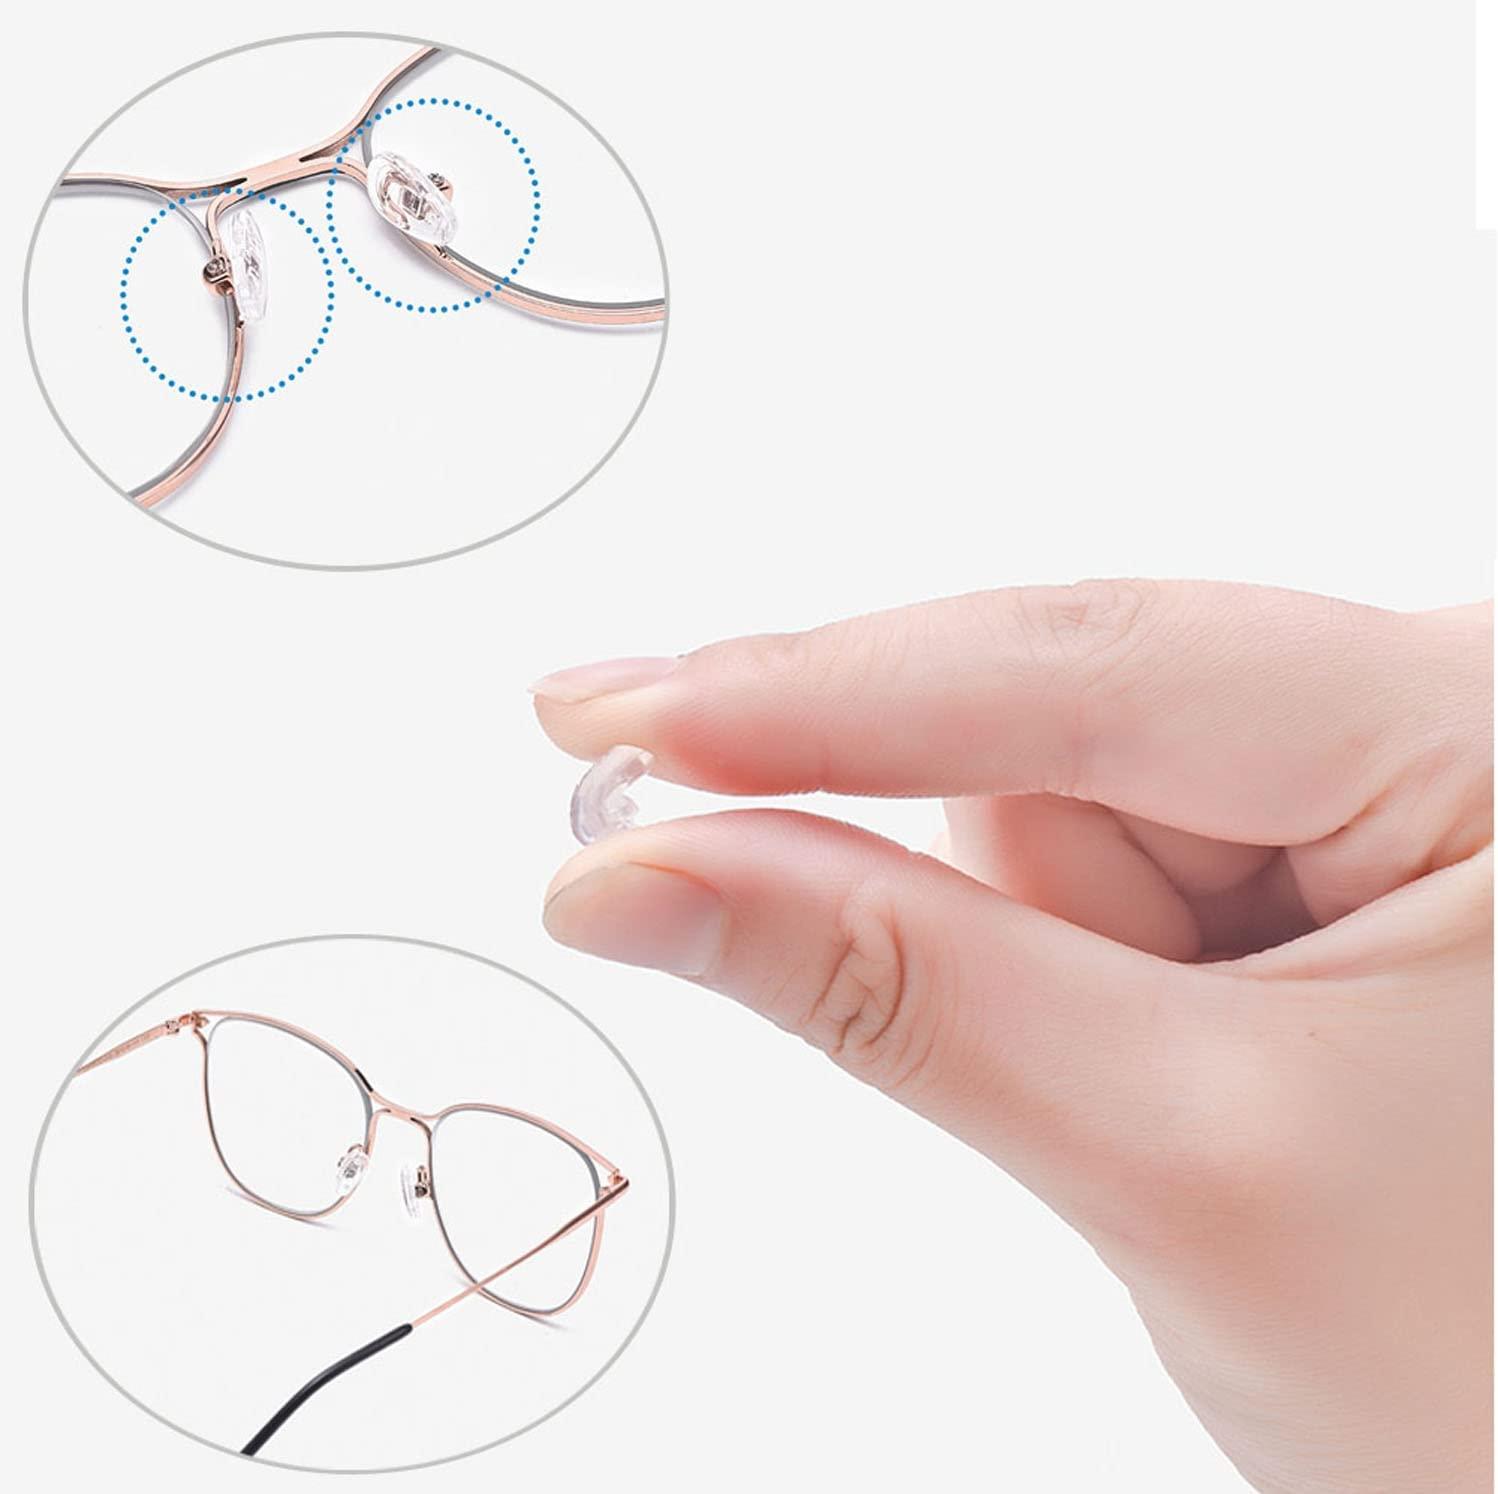 Glasses Repair kit with Glasses Screws - Includes Precision